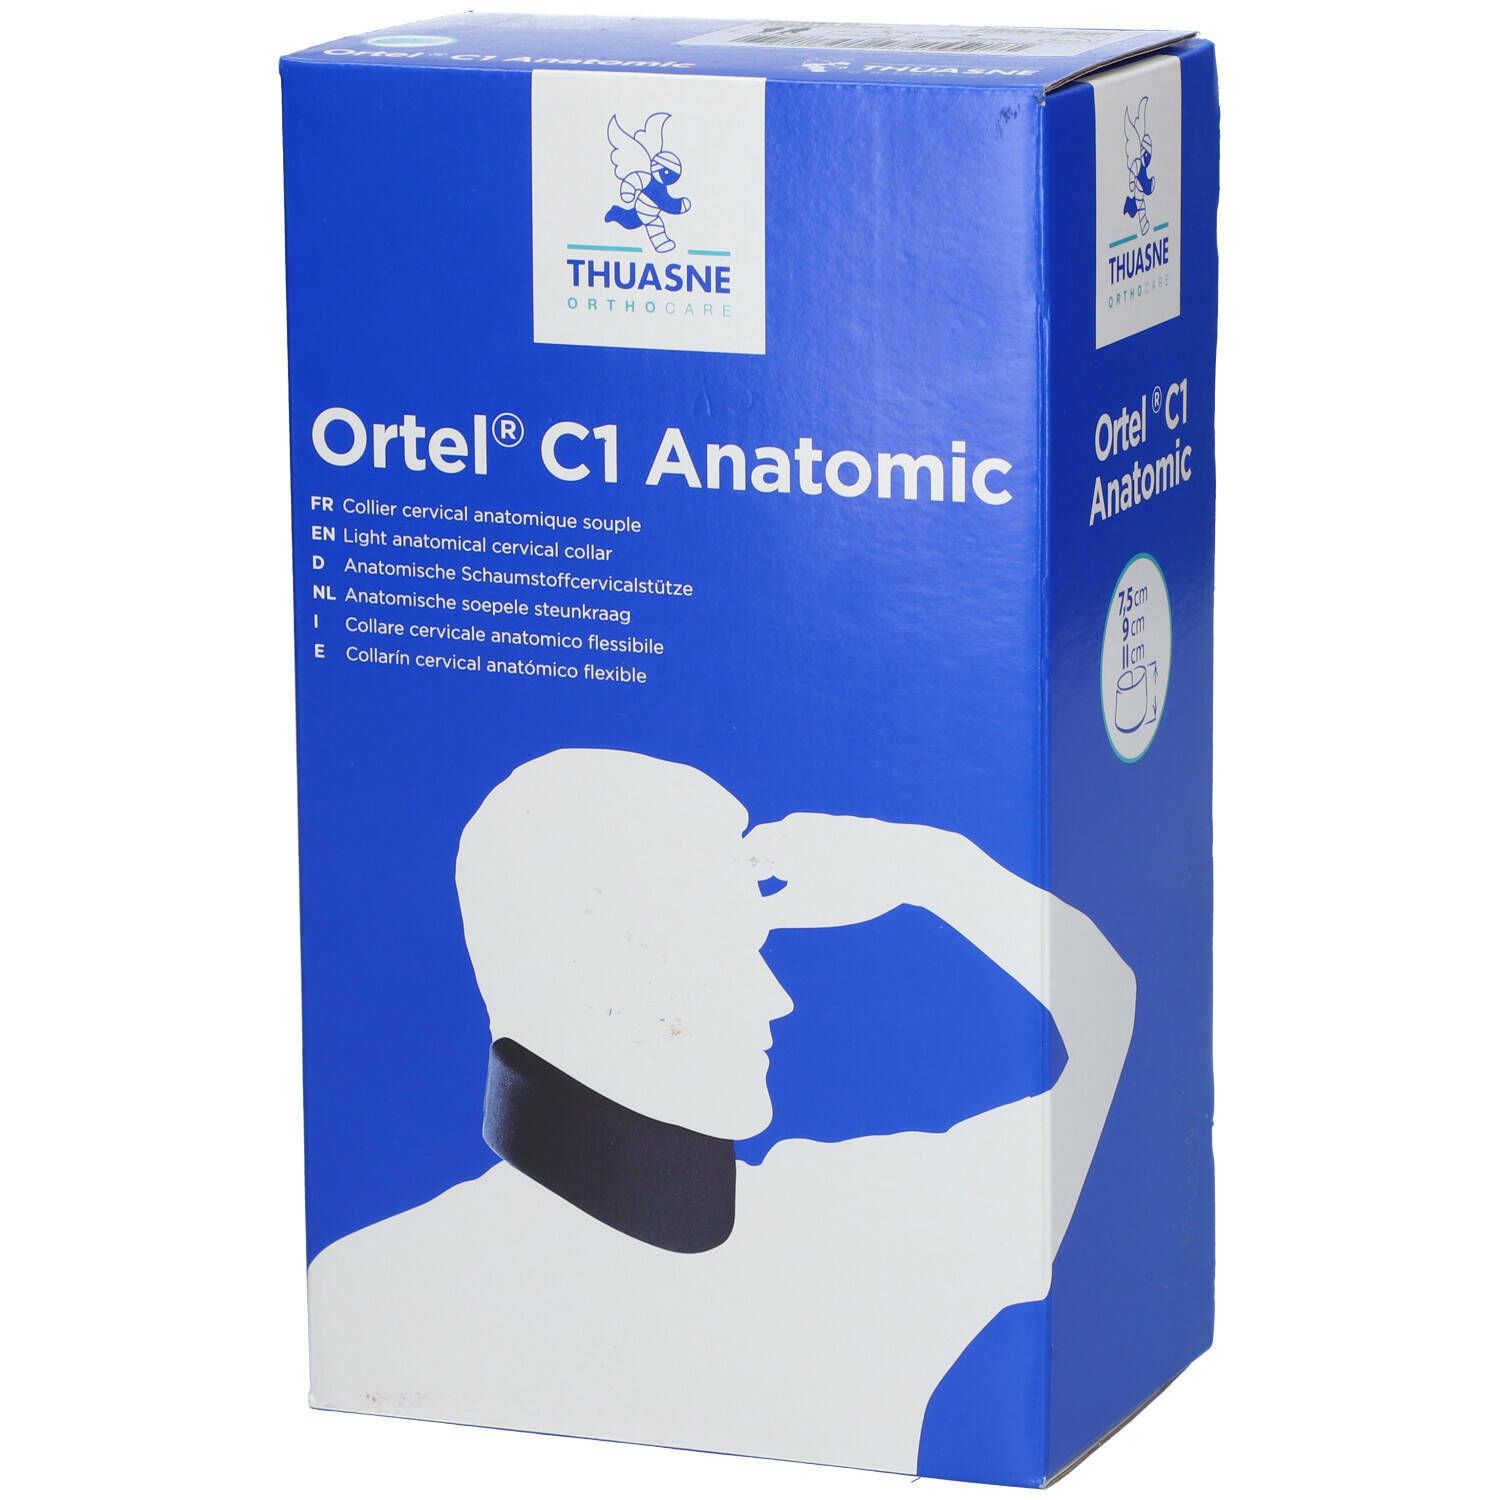 THUSANE Ortel® C1 Anatomic Halskrause